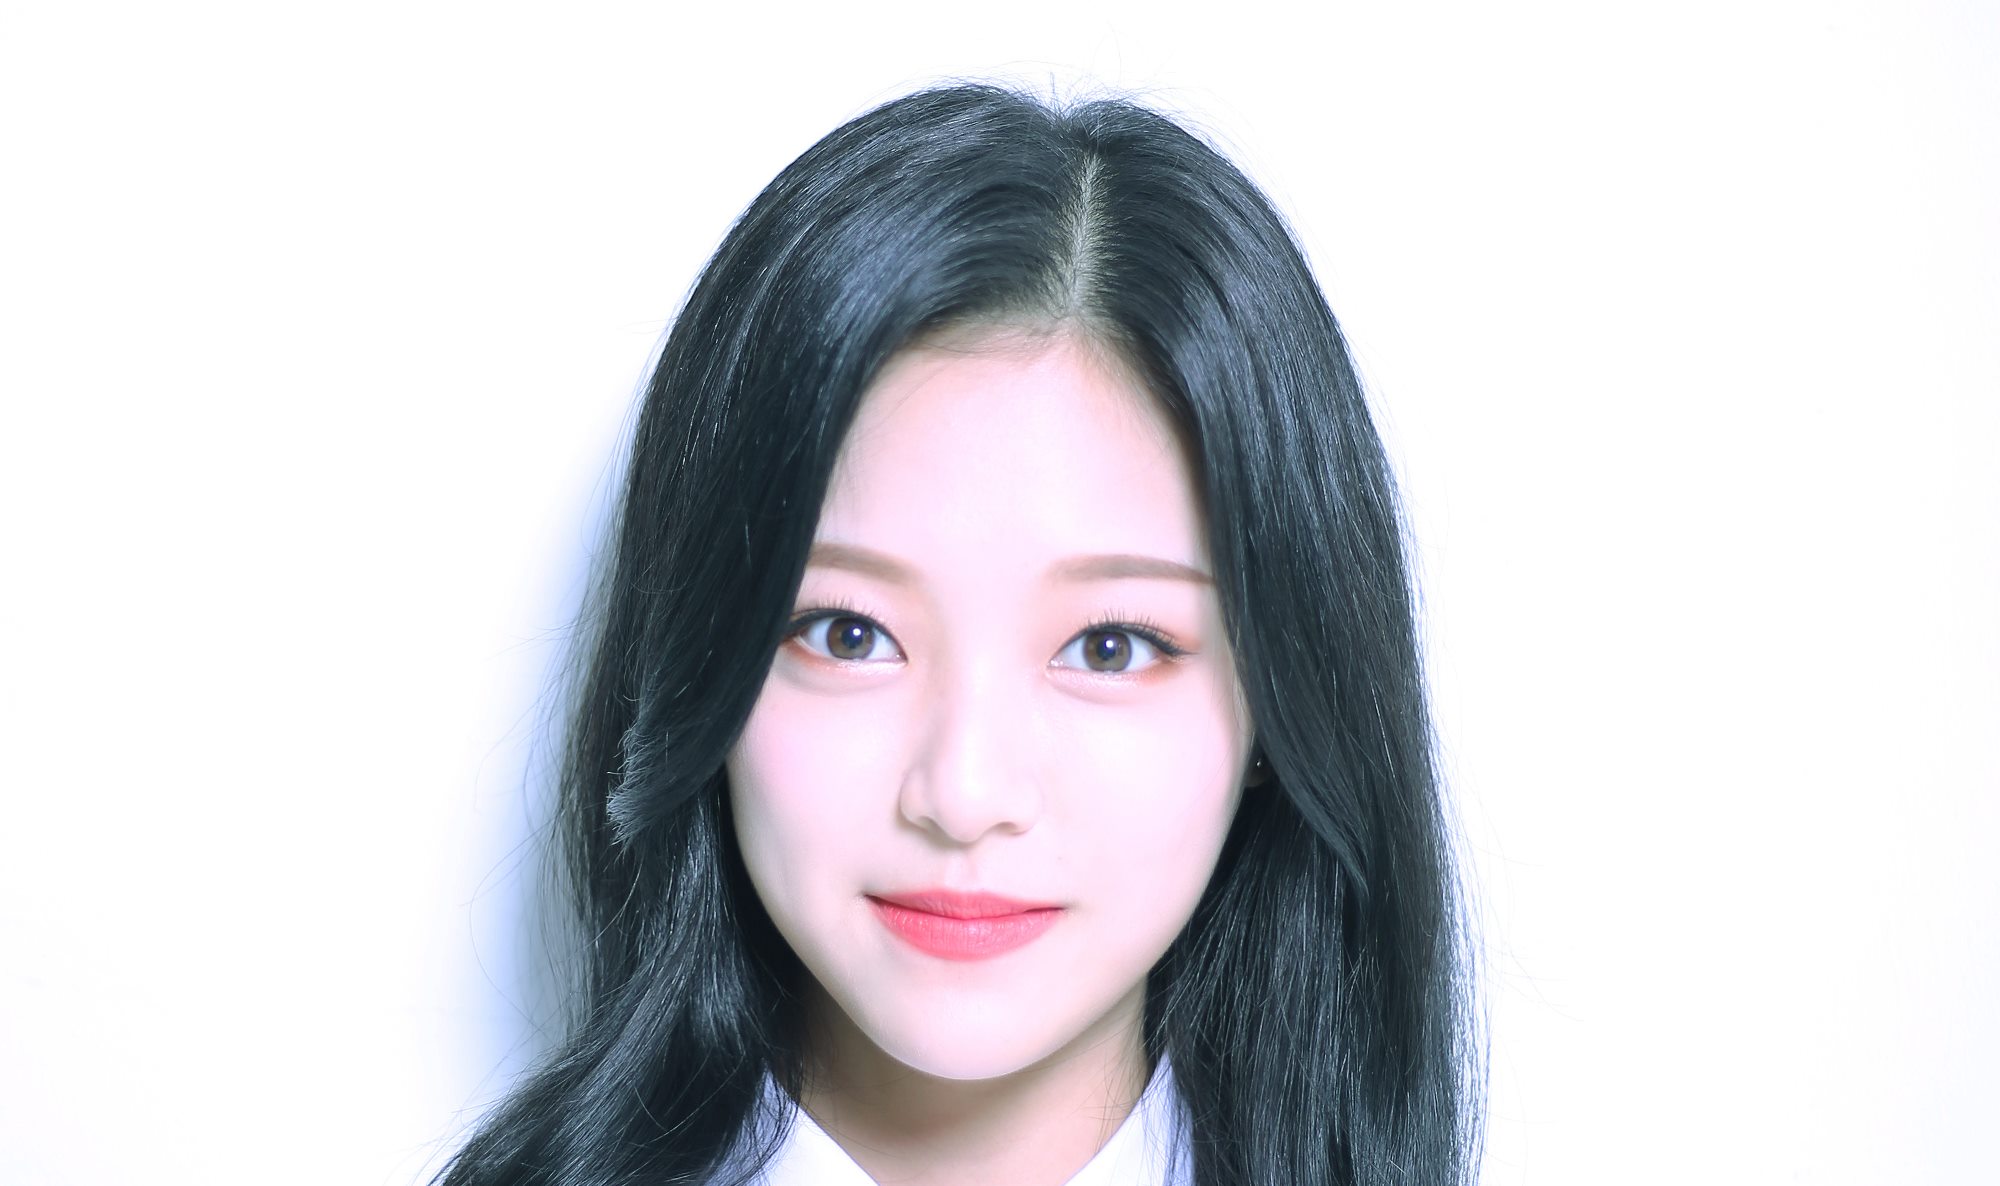 Loona Hyunjin